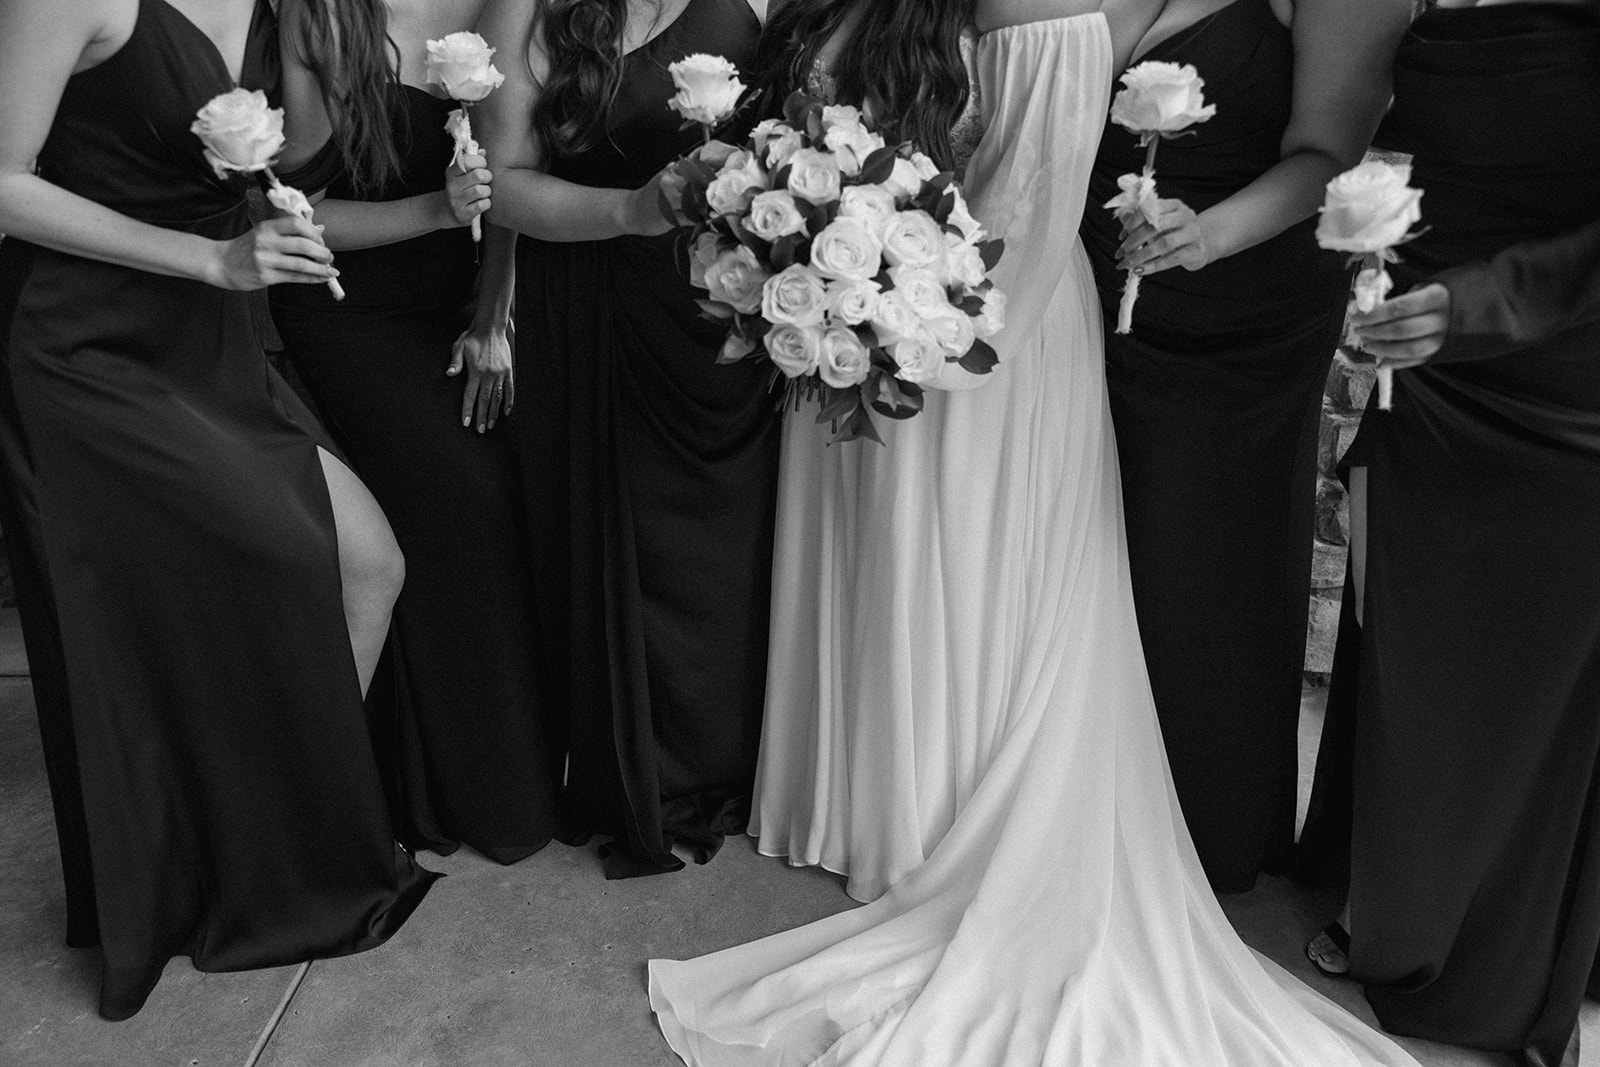 Bride and bridesmaids from a Tuscan Gardens wedding in Fresno County, California